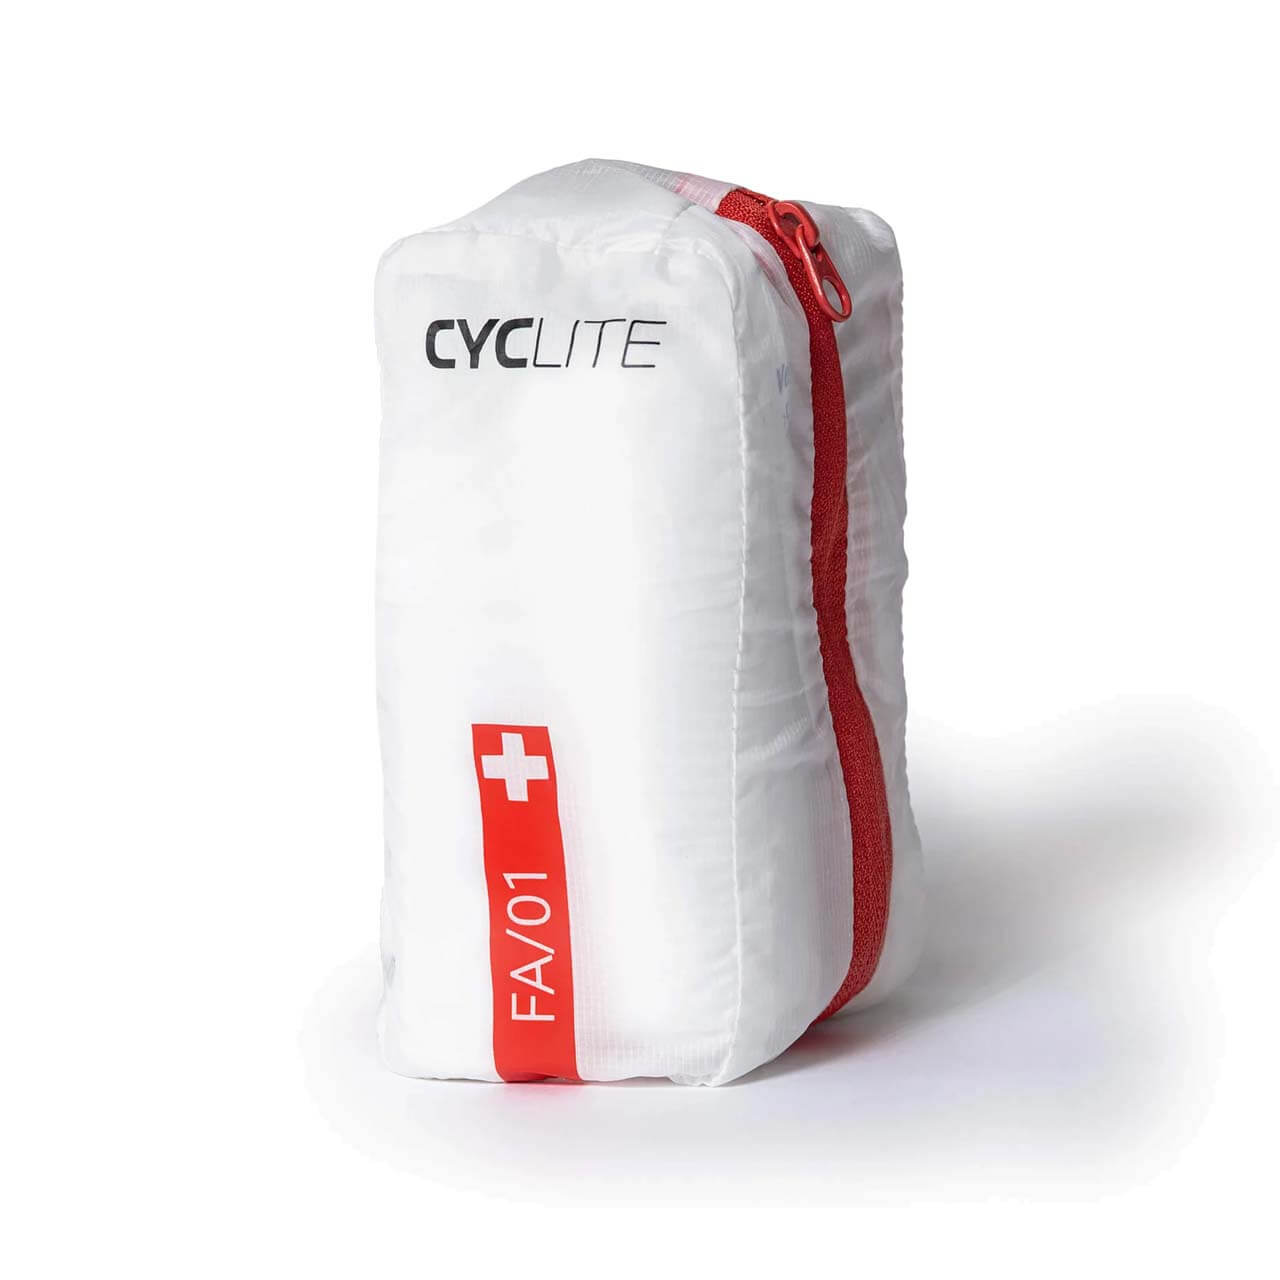 Cyclite First Aid Kit